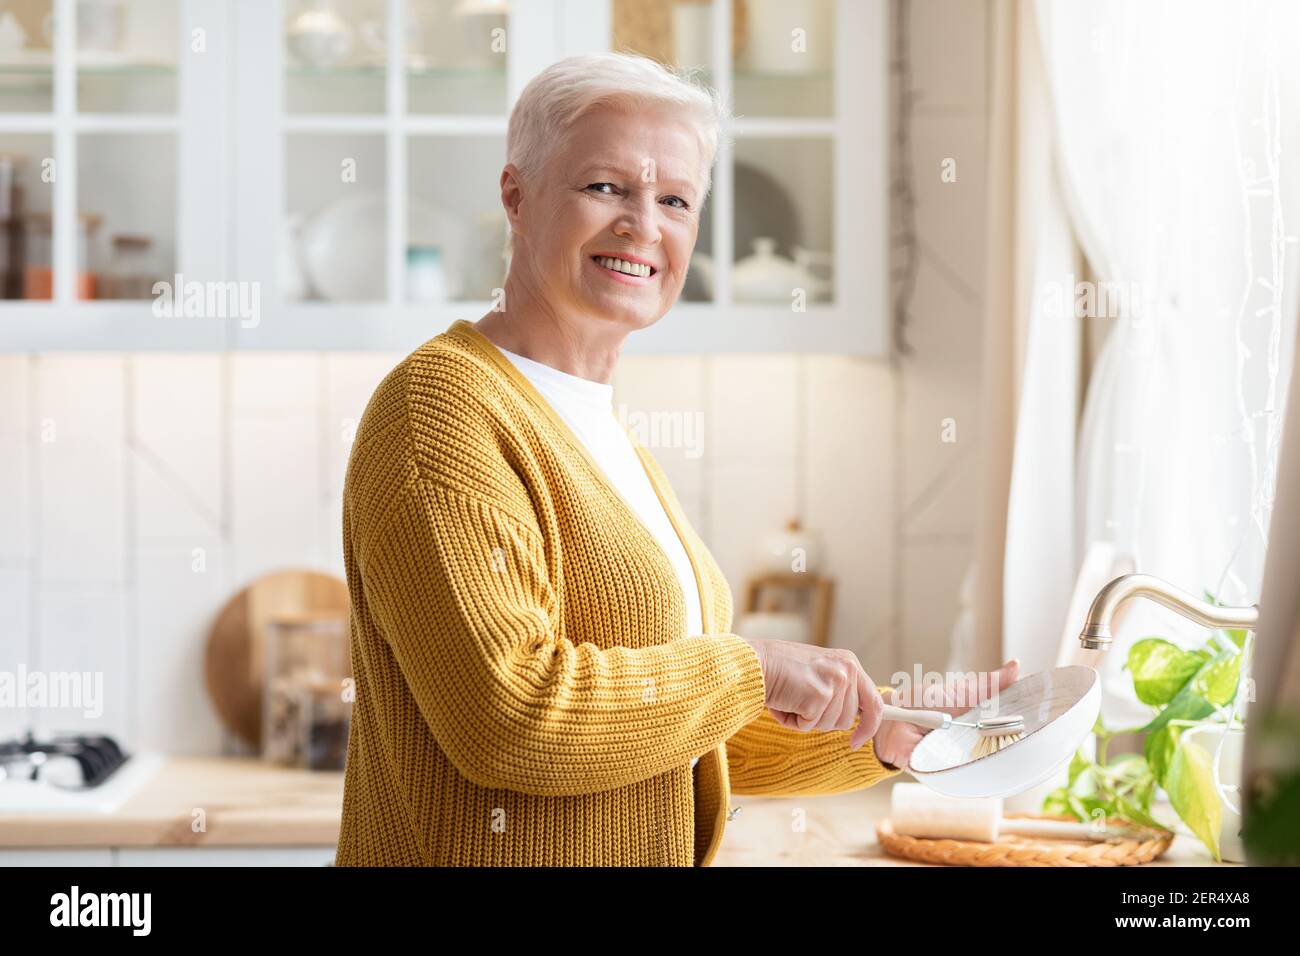 https://c8.alamy.com/comp/2ER4XA8/cheerful-senior-woman-washing-dishes-in-kitchen-2ER4XA8.jpg